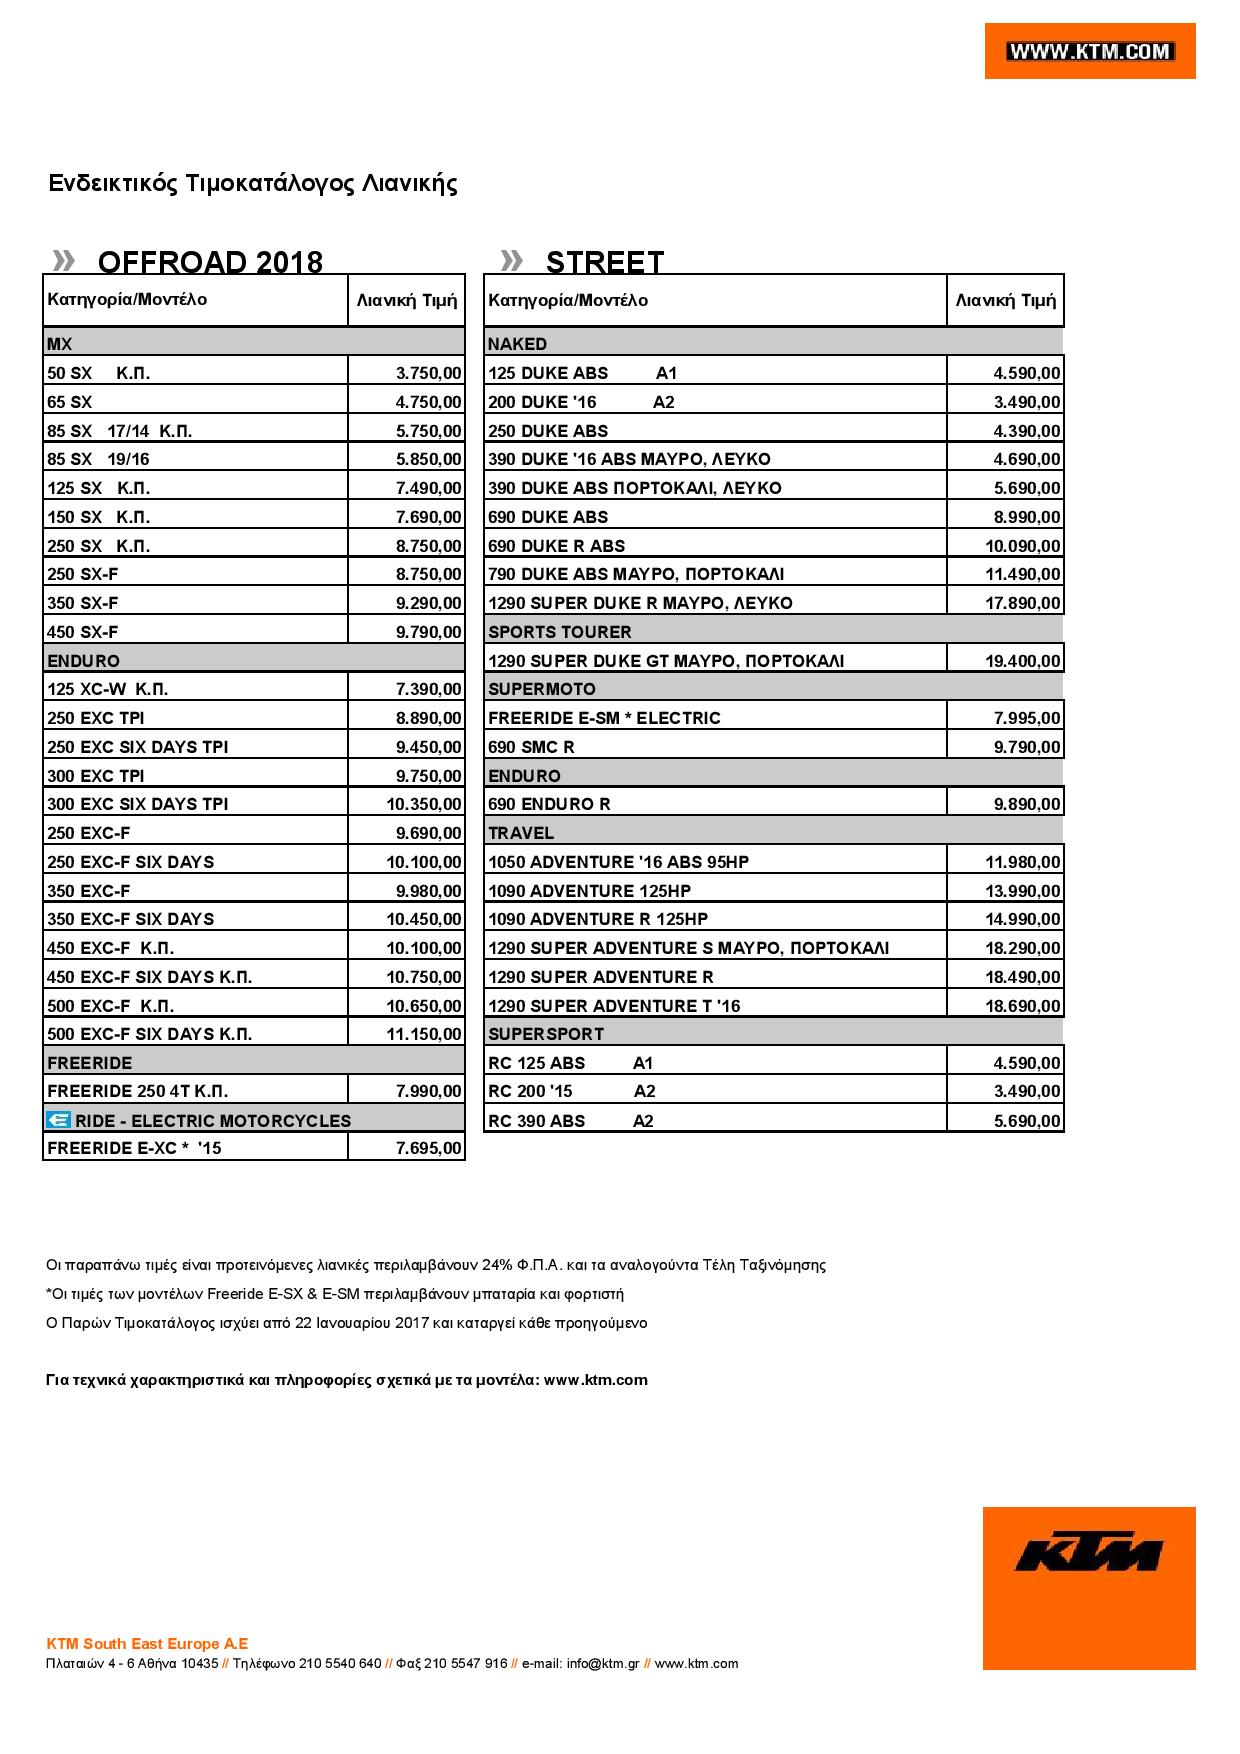 KTM Retail Pricelist 2018 22.01.2018 page 001